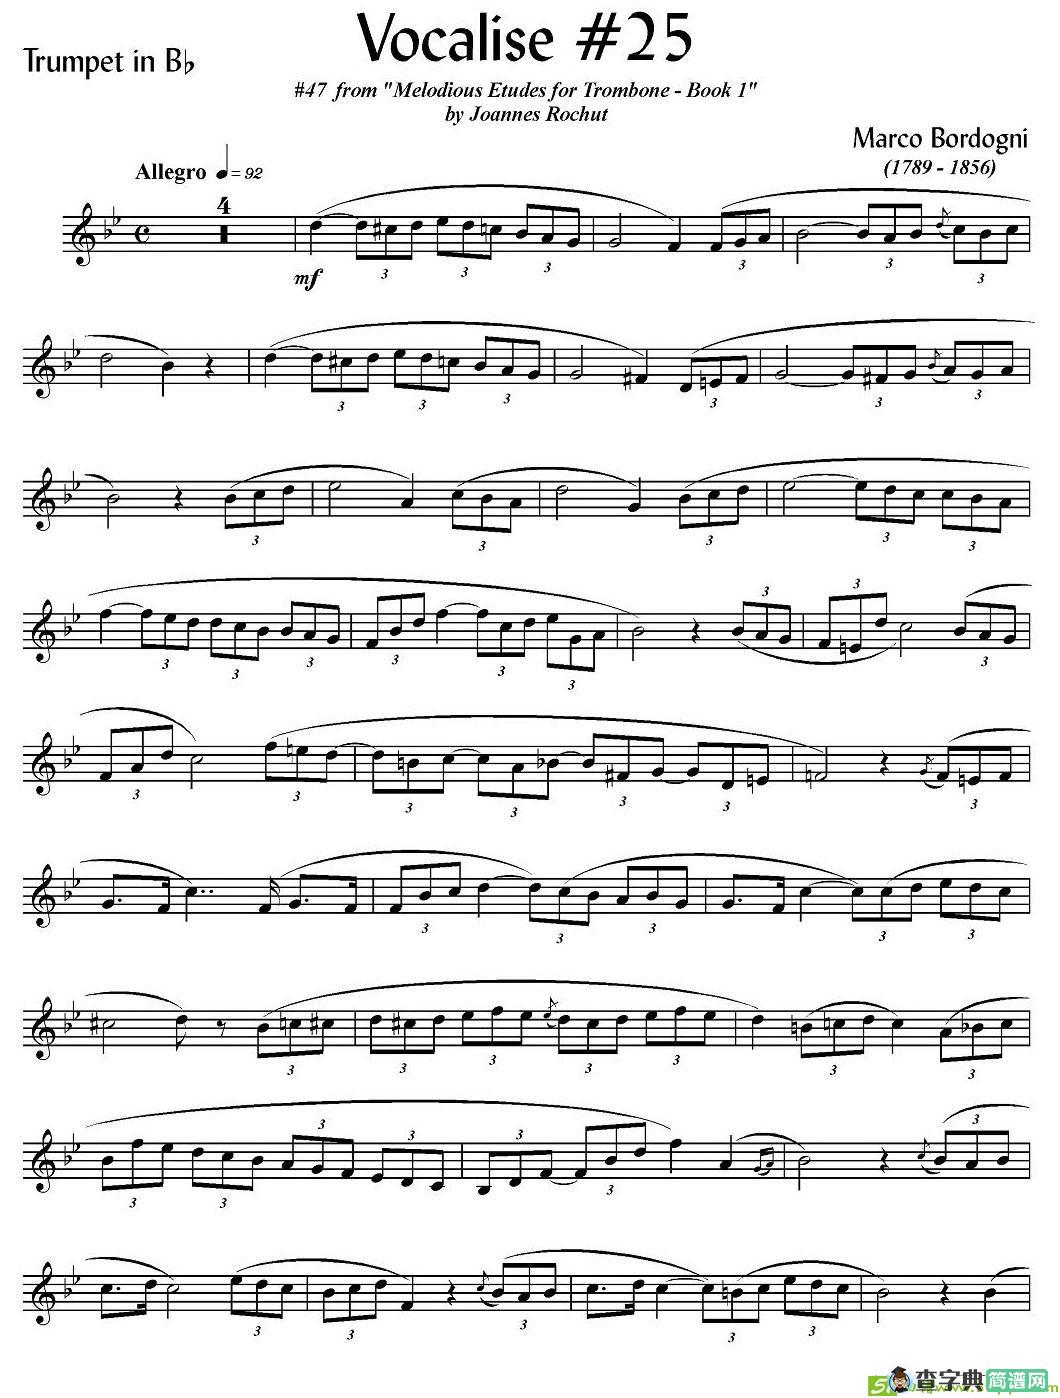 Bordogni - Vocalise #25铜管谱(Marco作曲)